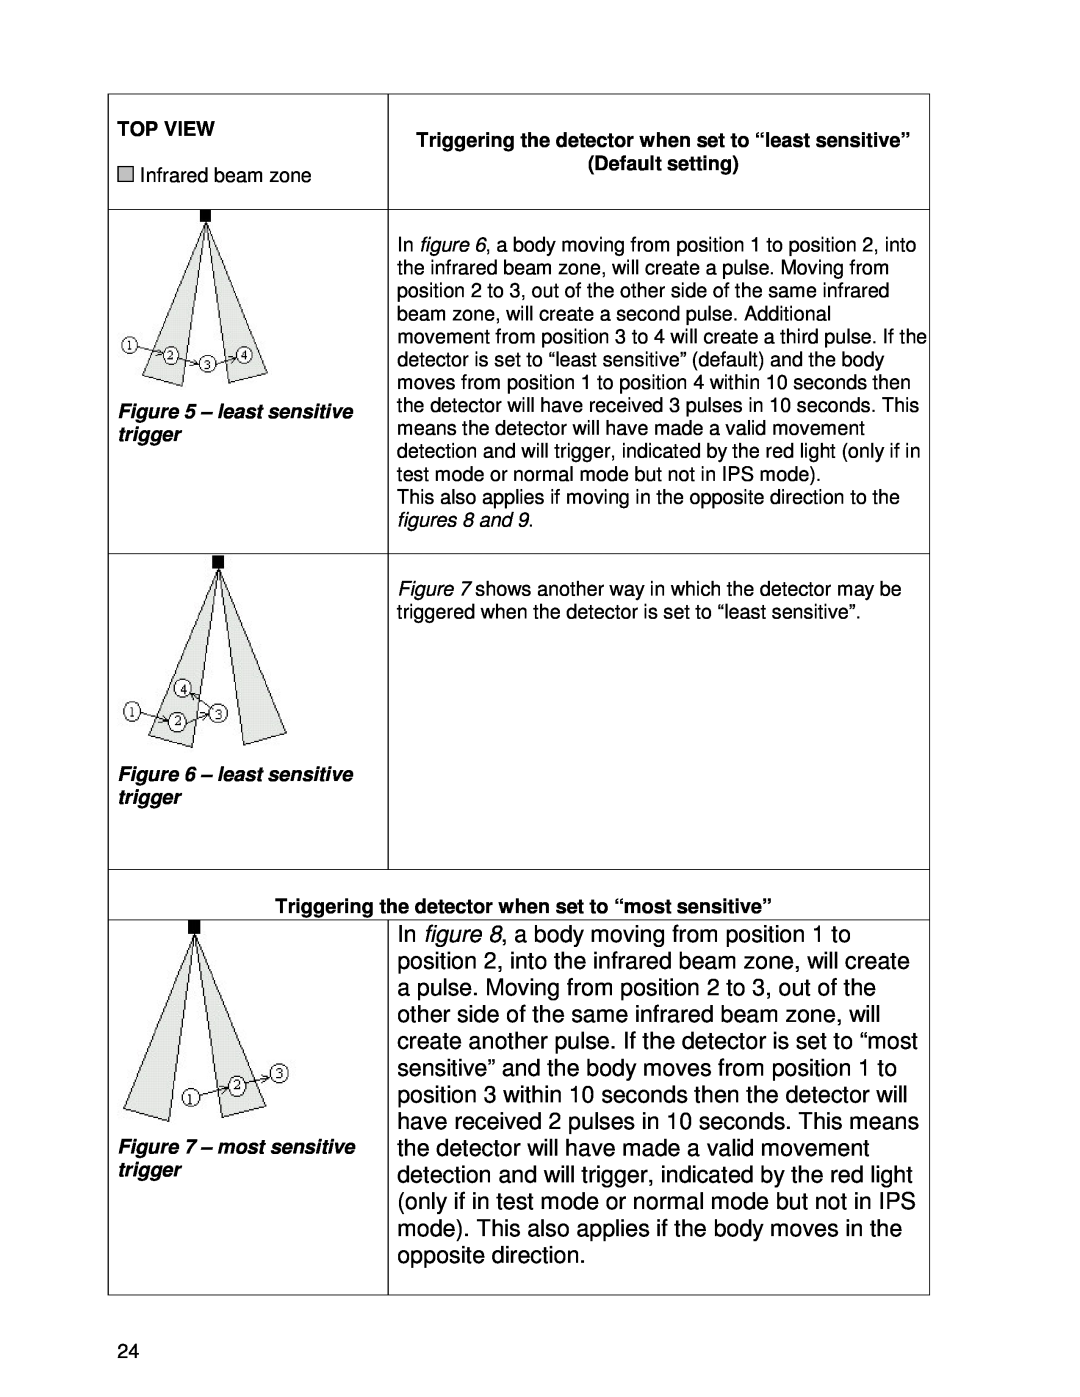 Ironman Fitness V2 instruction manual Top View, Default setting, least sensitive trigger, most sensitive trigger 